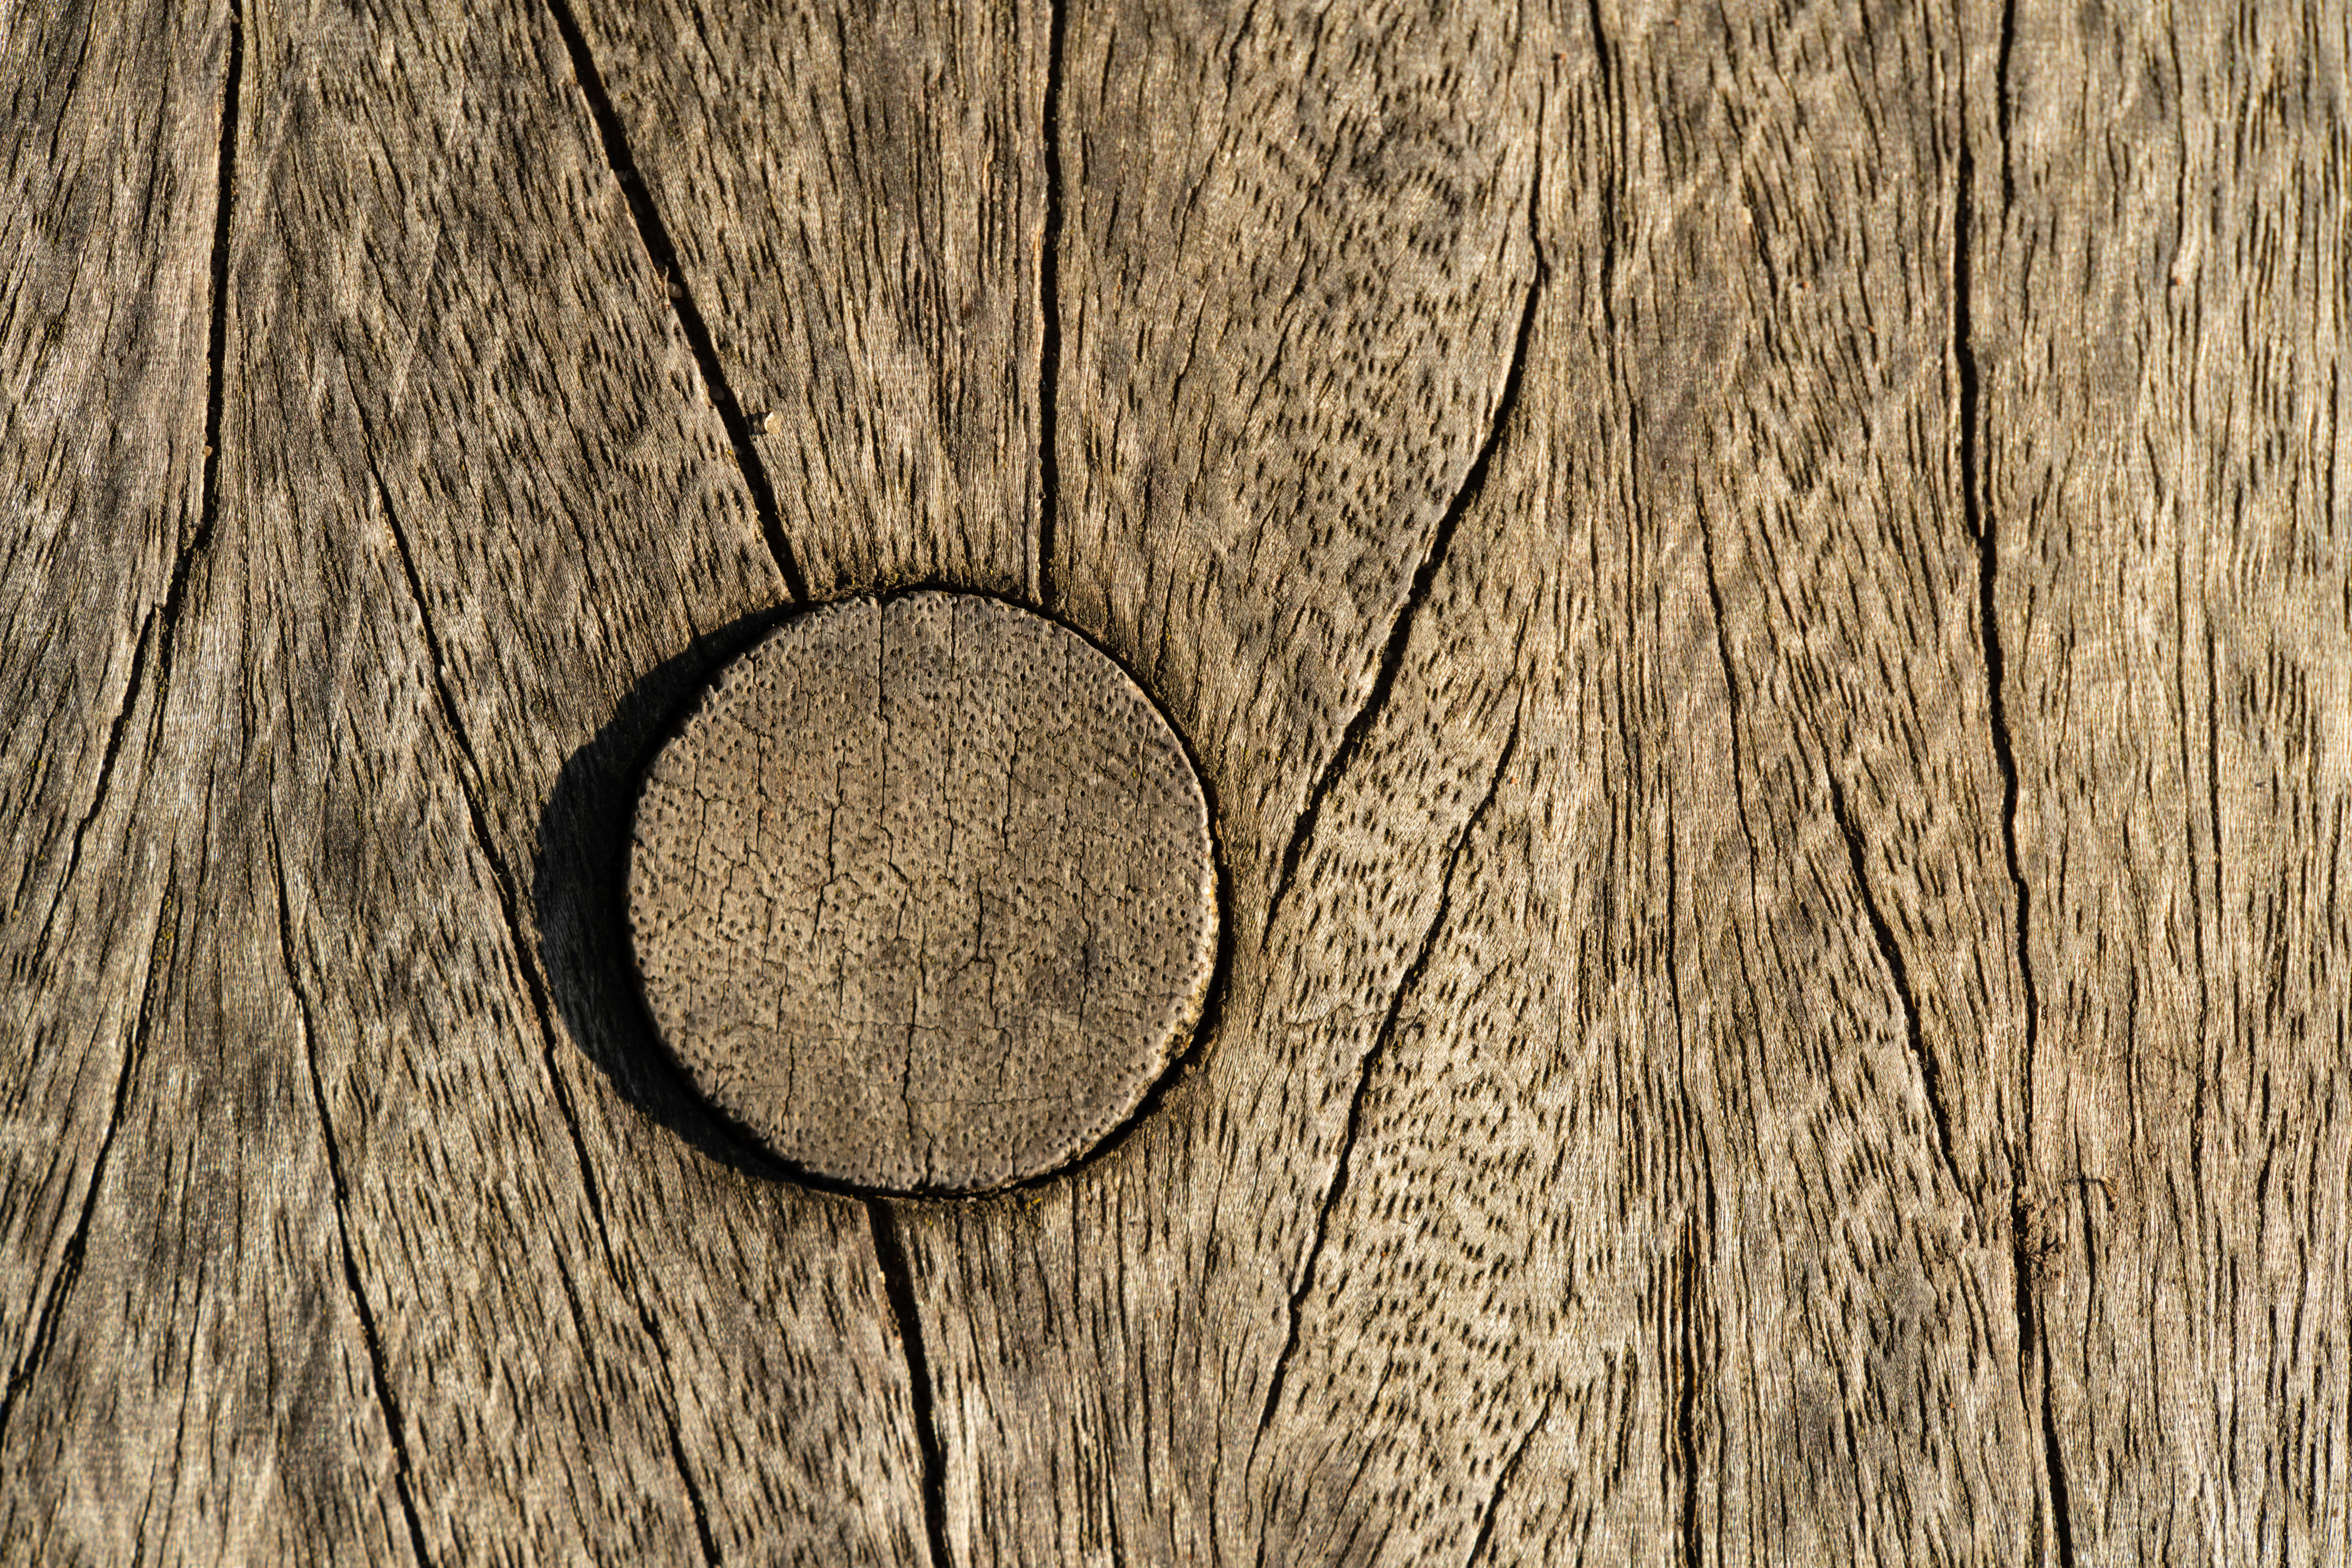 Laowa 85mm f/5.6 2x Ultra Macro APO wood texture sample image